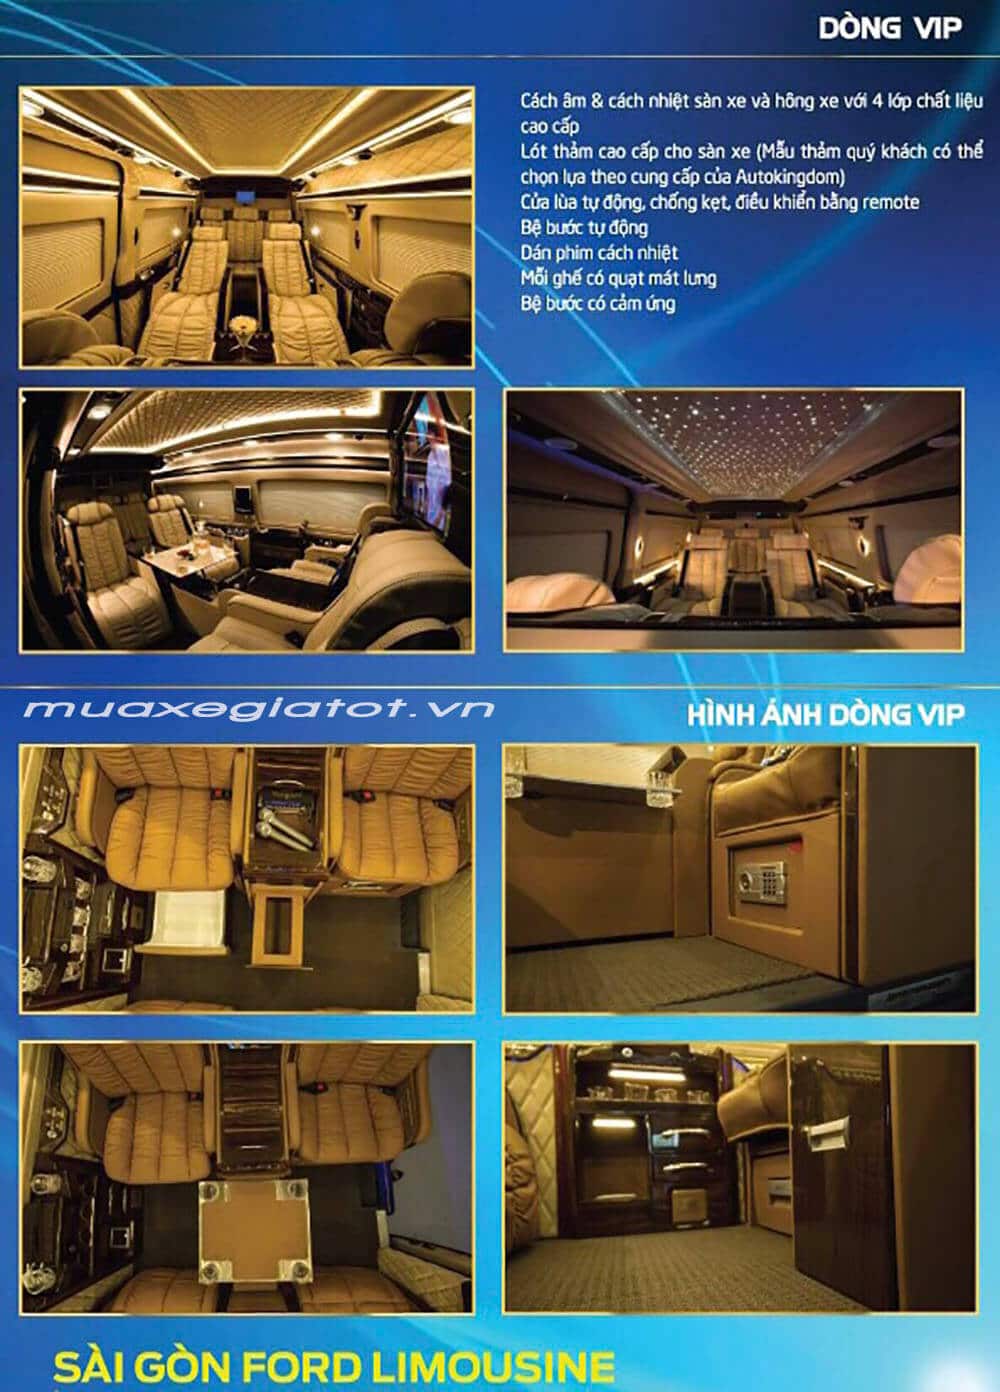 catalogue xe ford transit limousine muaxegiatot vn 4 - [Catalogue] Giới thiệu Ford Transit Limousine 10 chỗ chính hãng